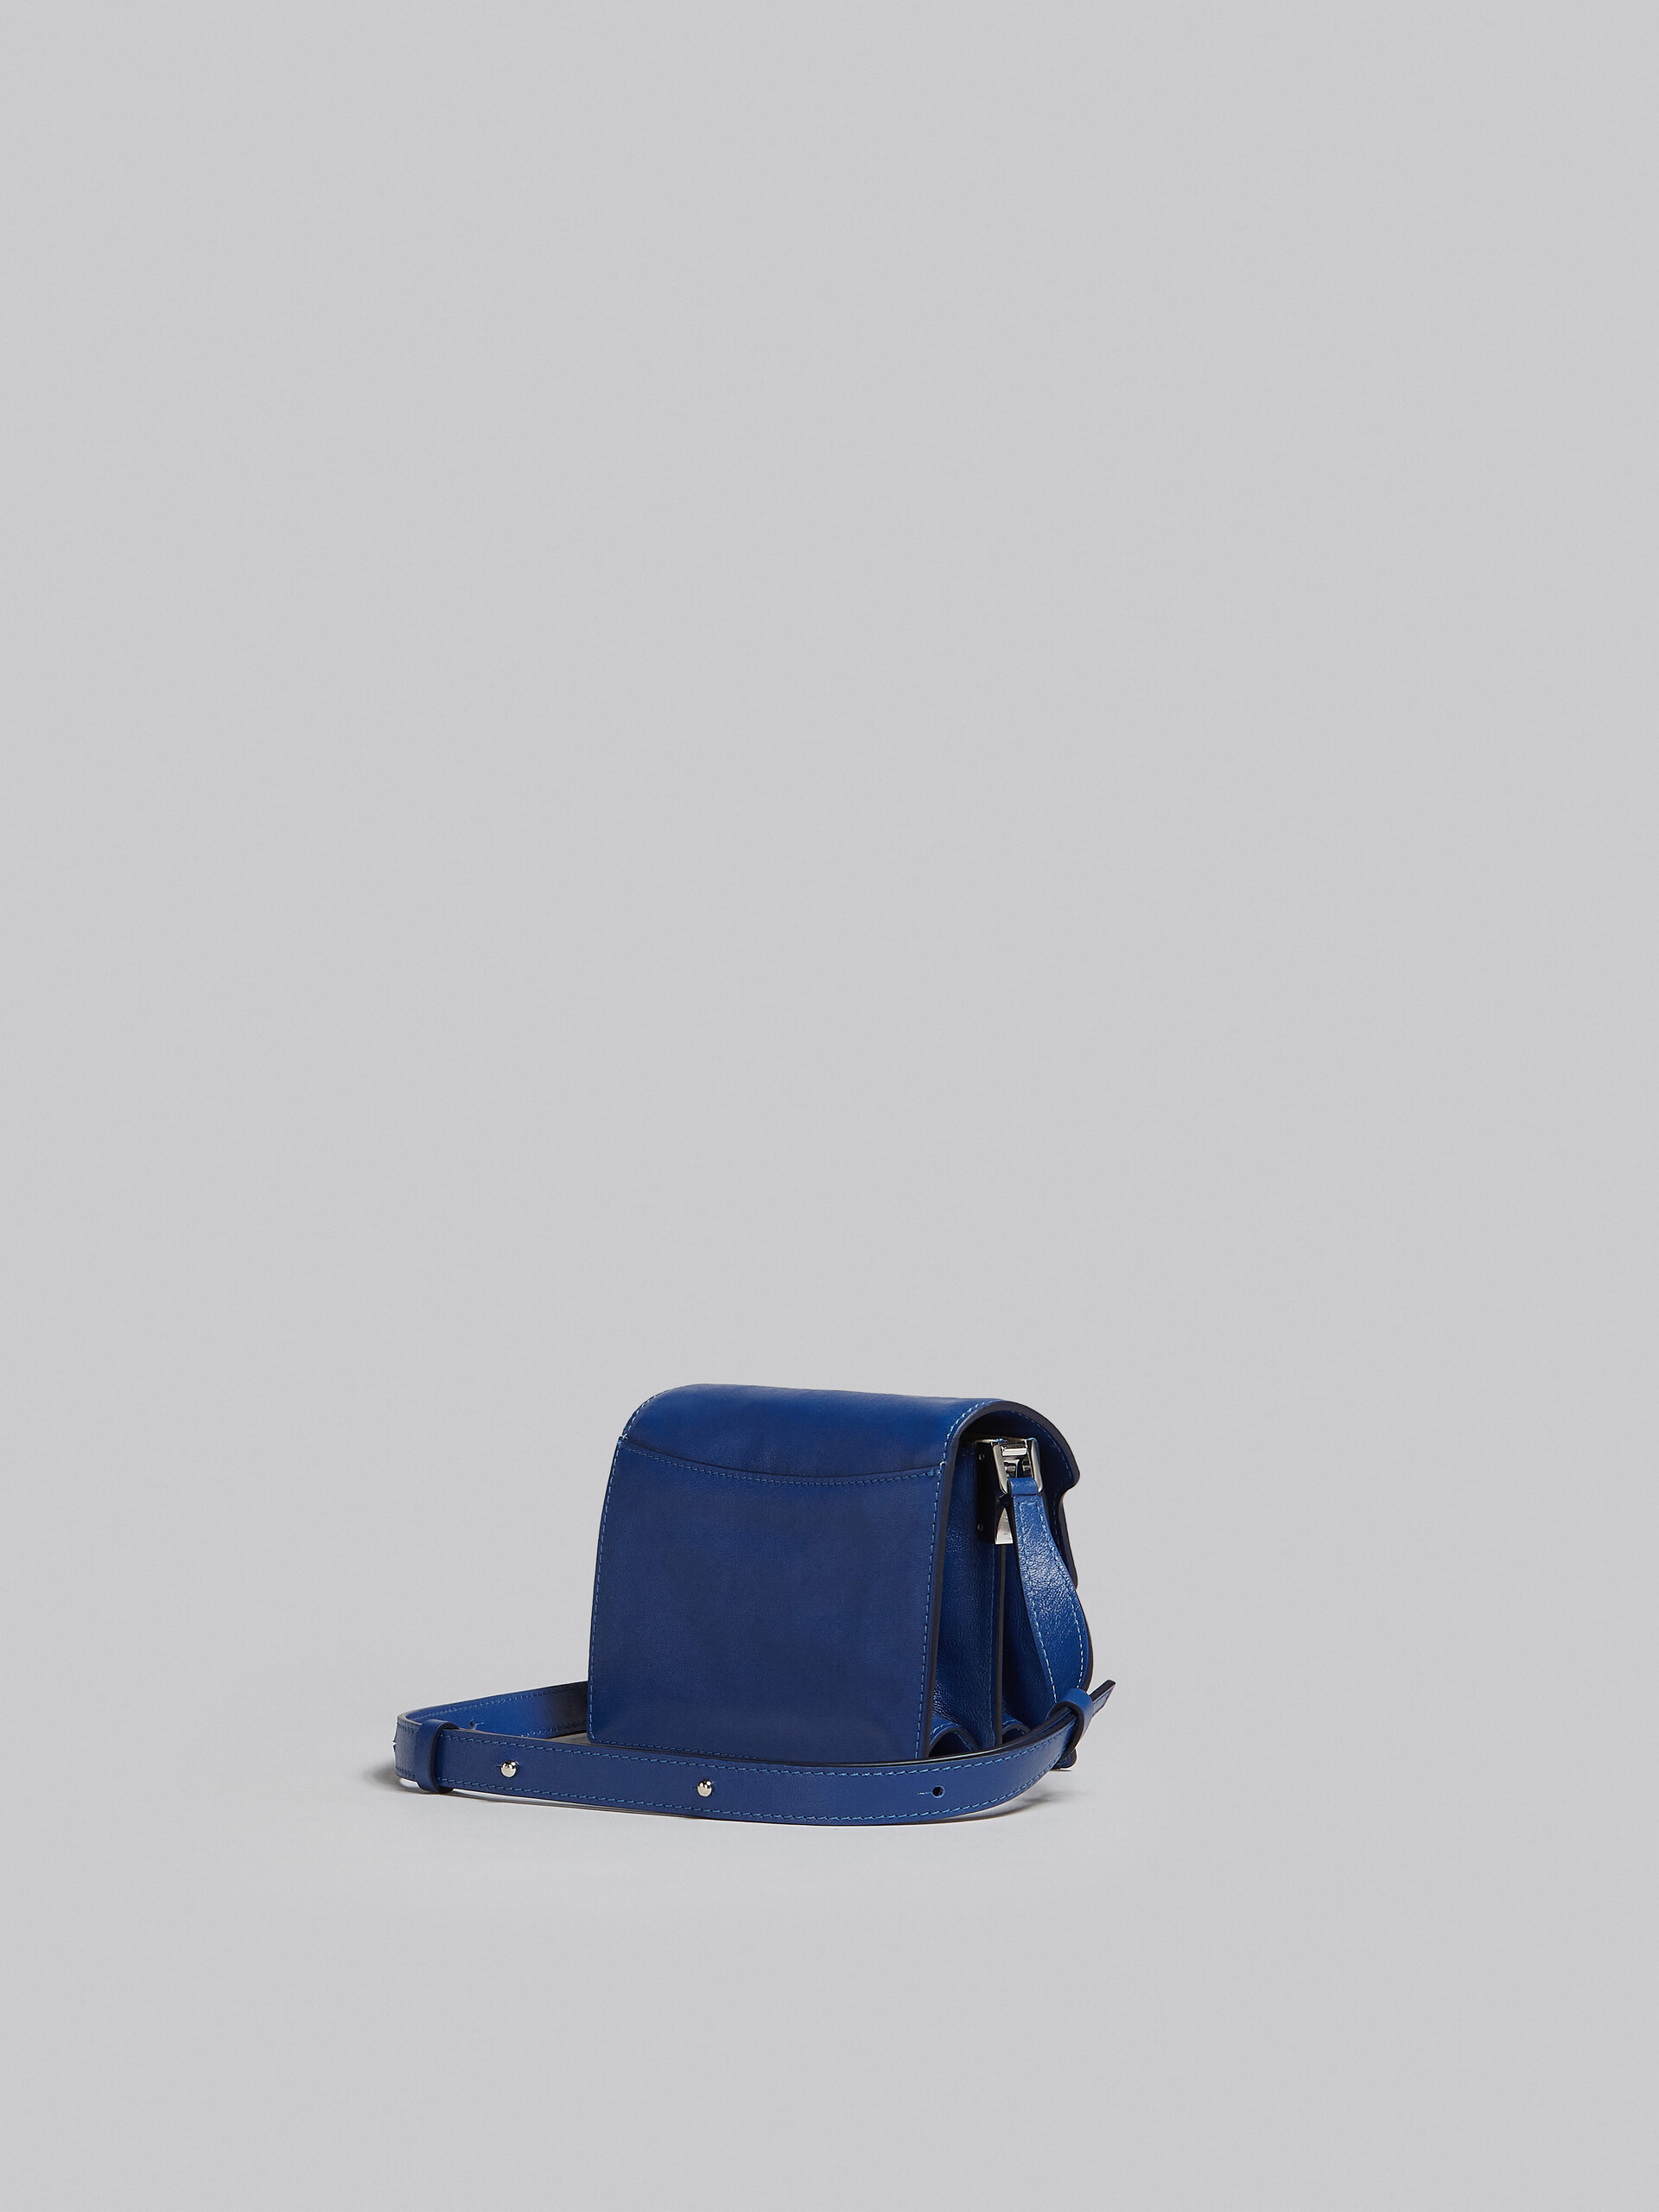 Trunk Soft Mini Bag in blue leather - Shoulder Bags - Image 3